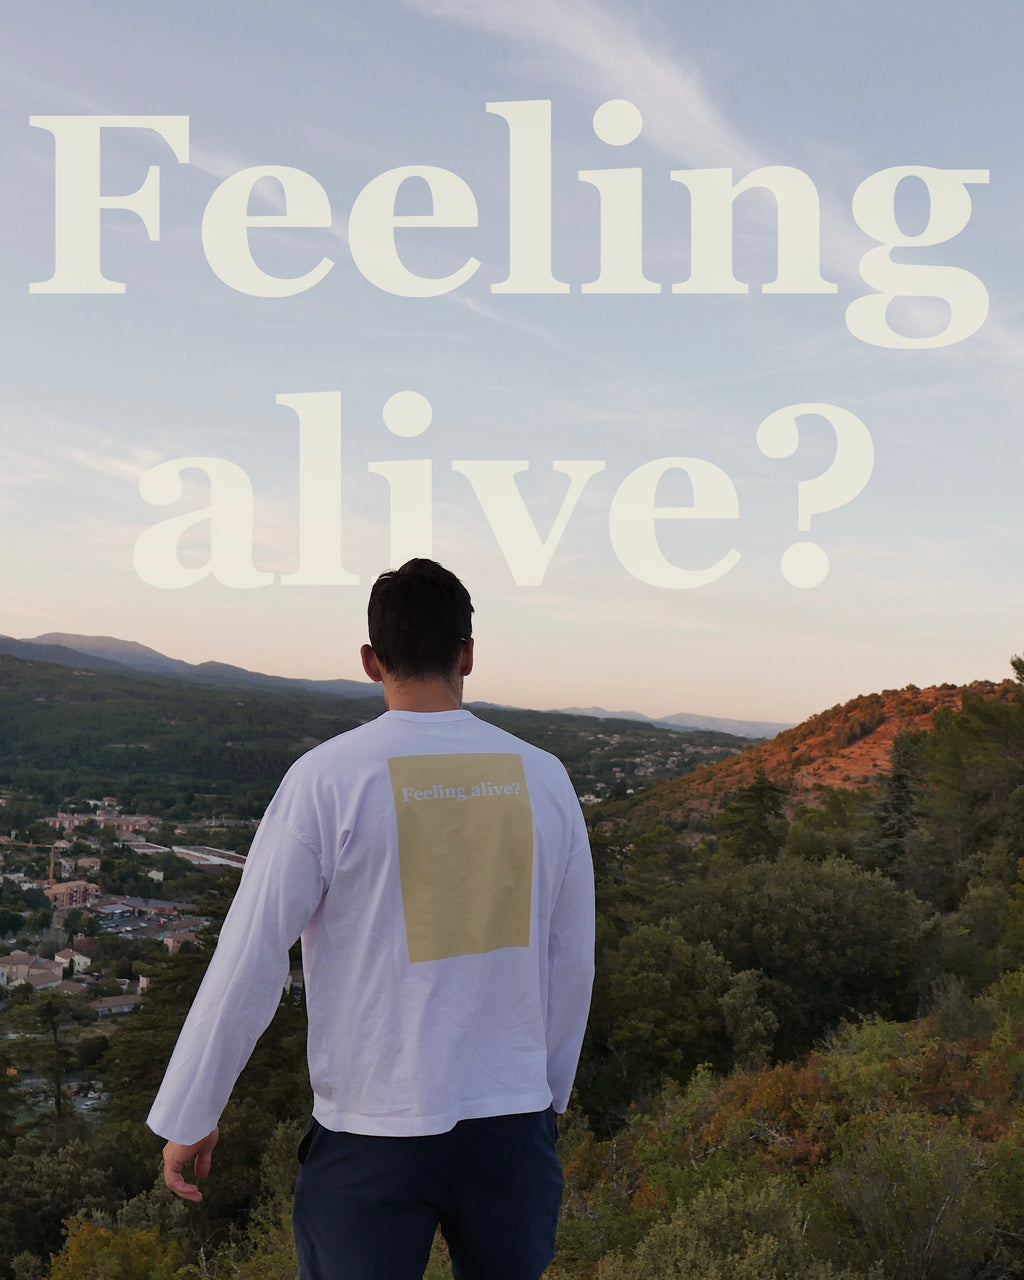 Feeling alive?